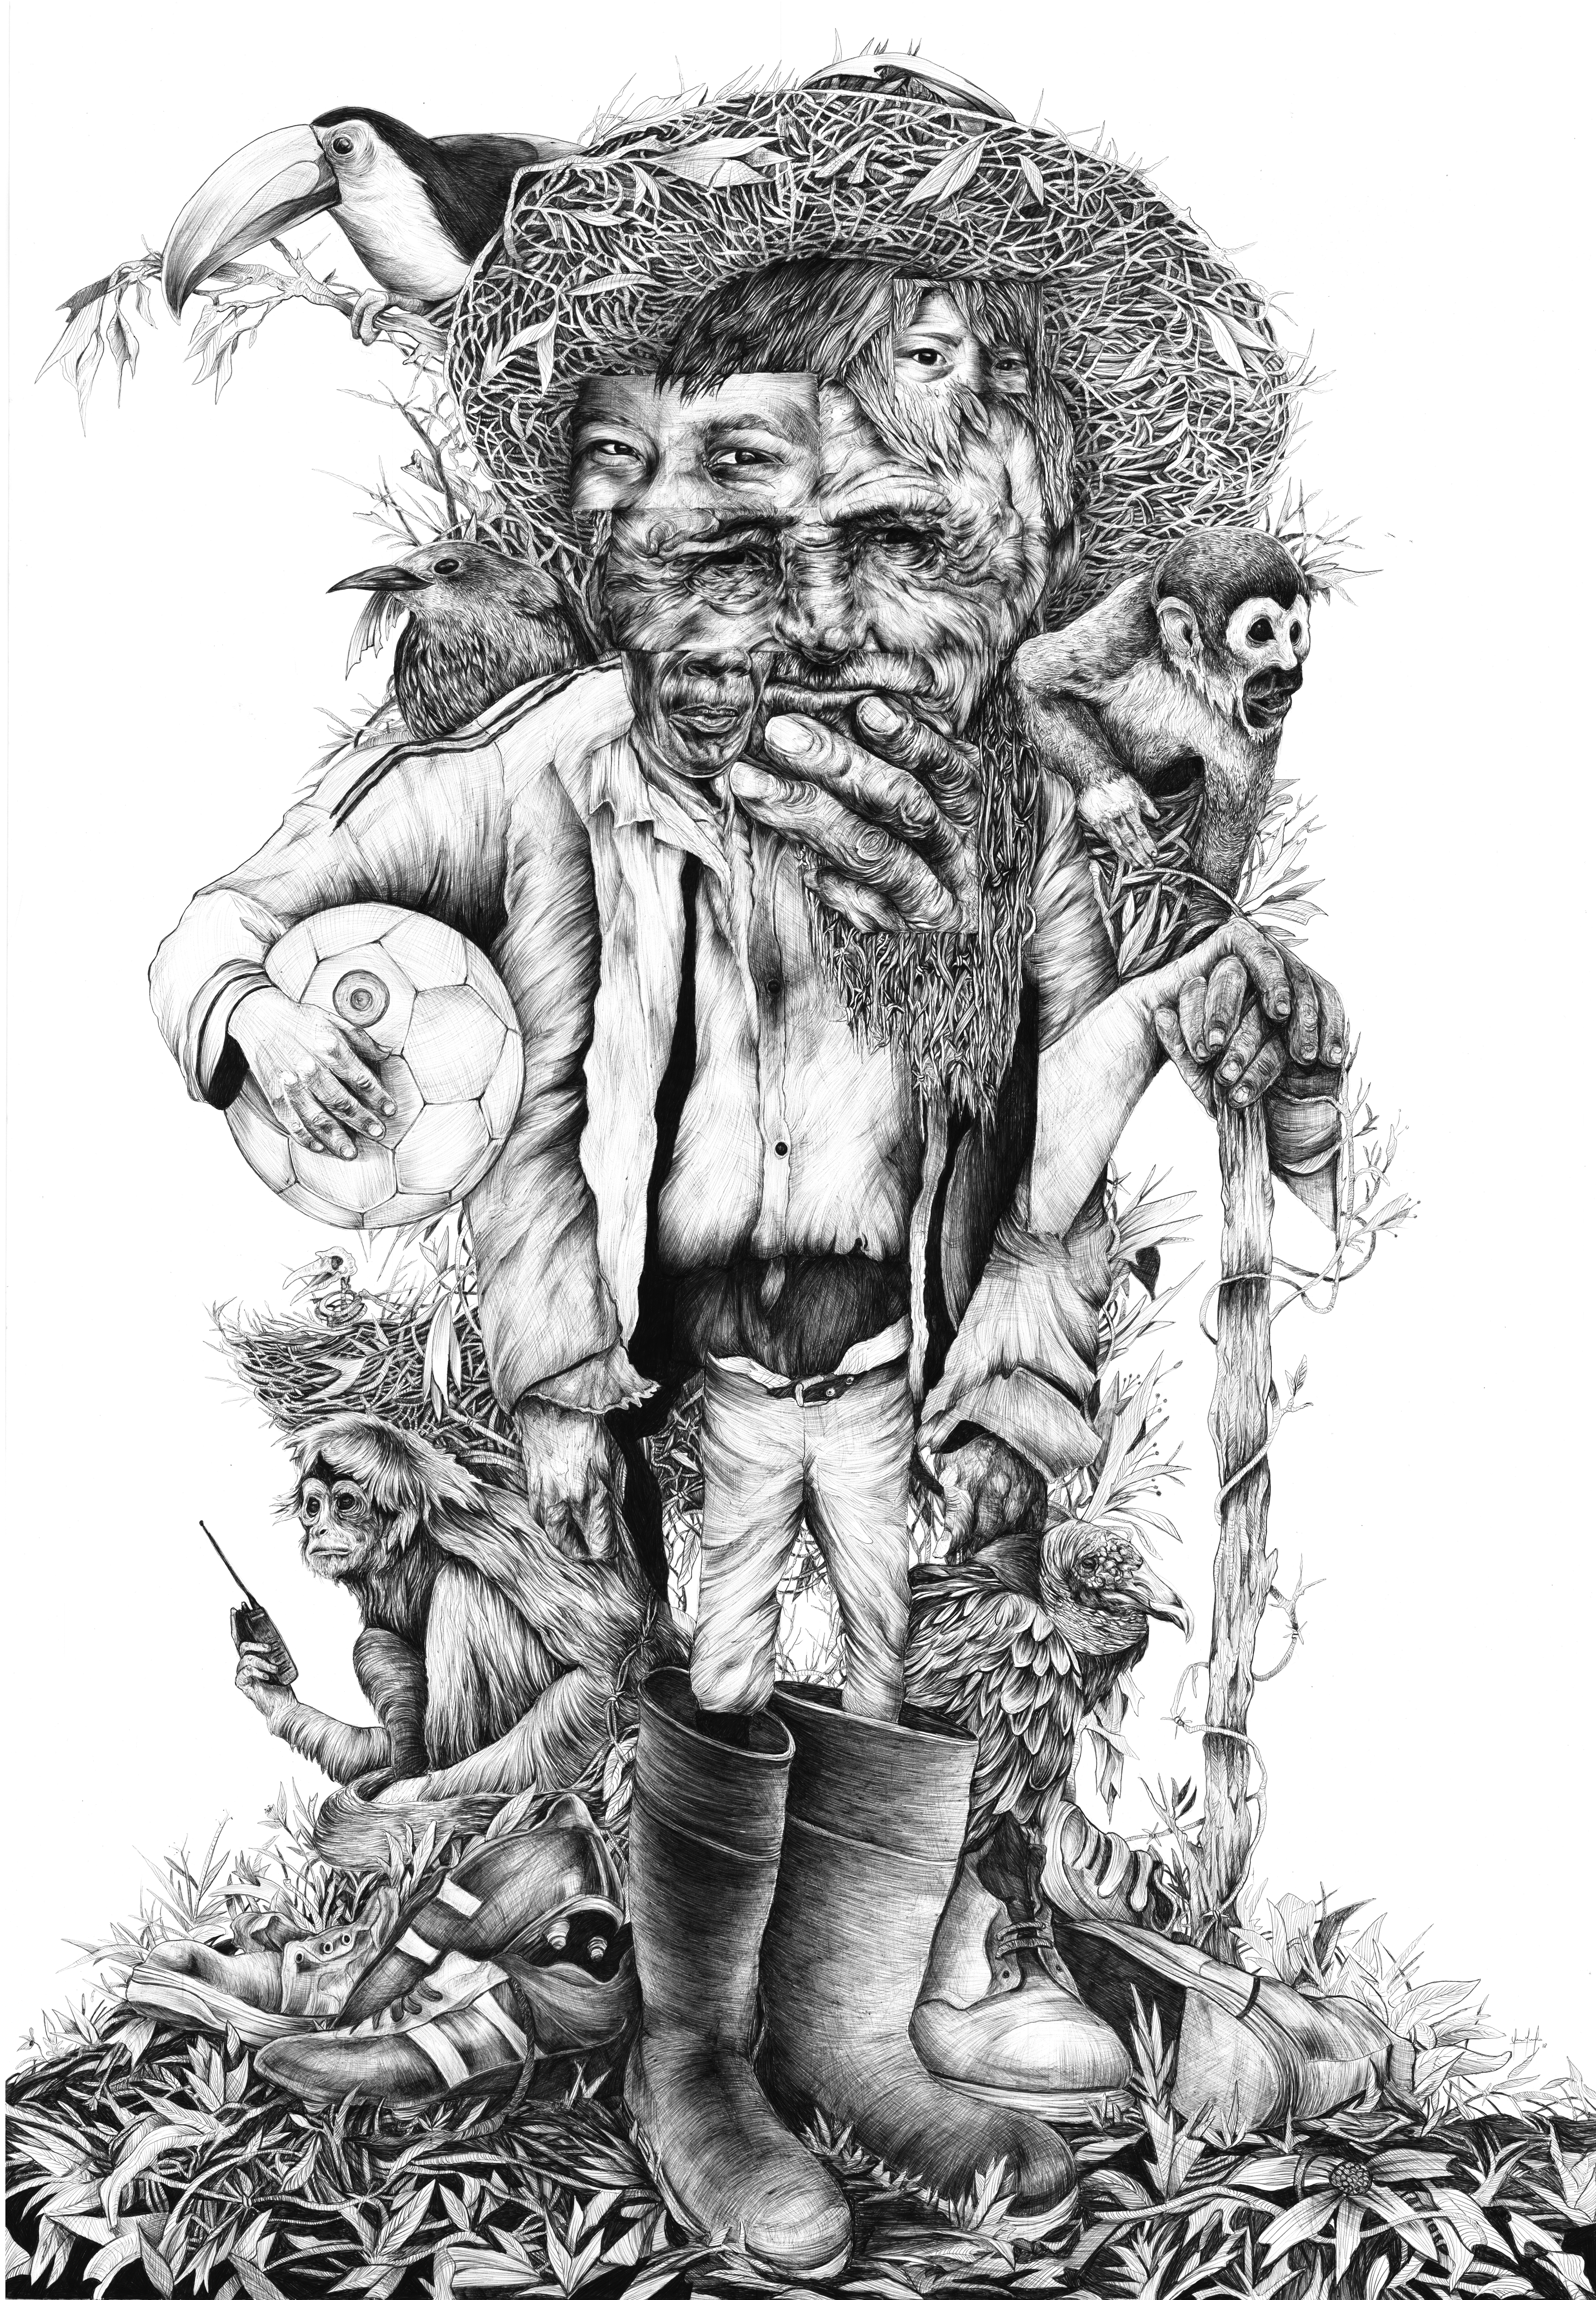  Ilustración de Ricardo Macía